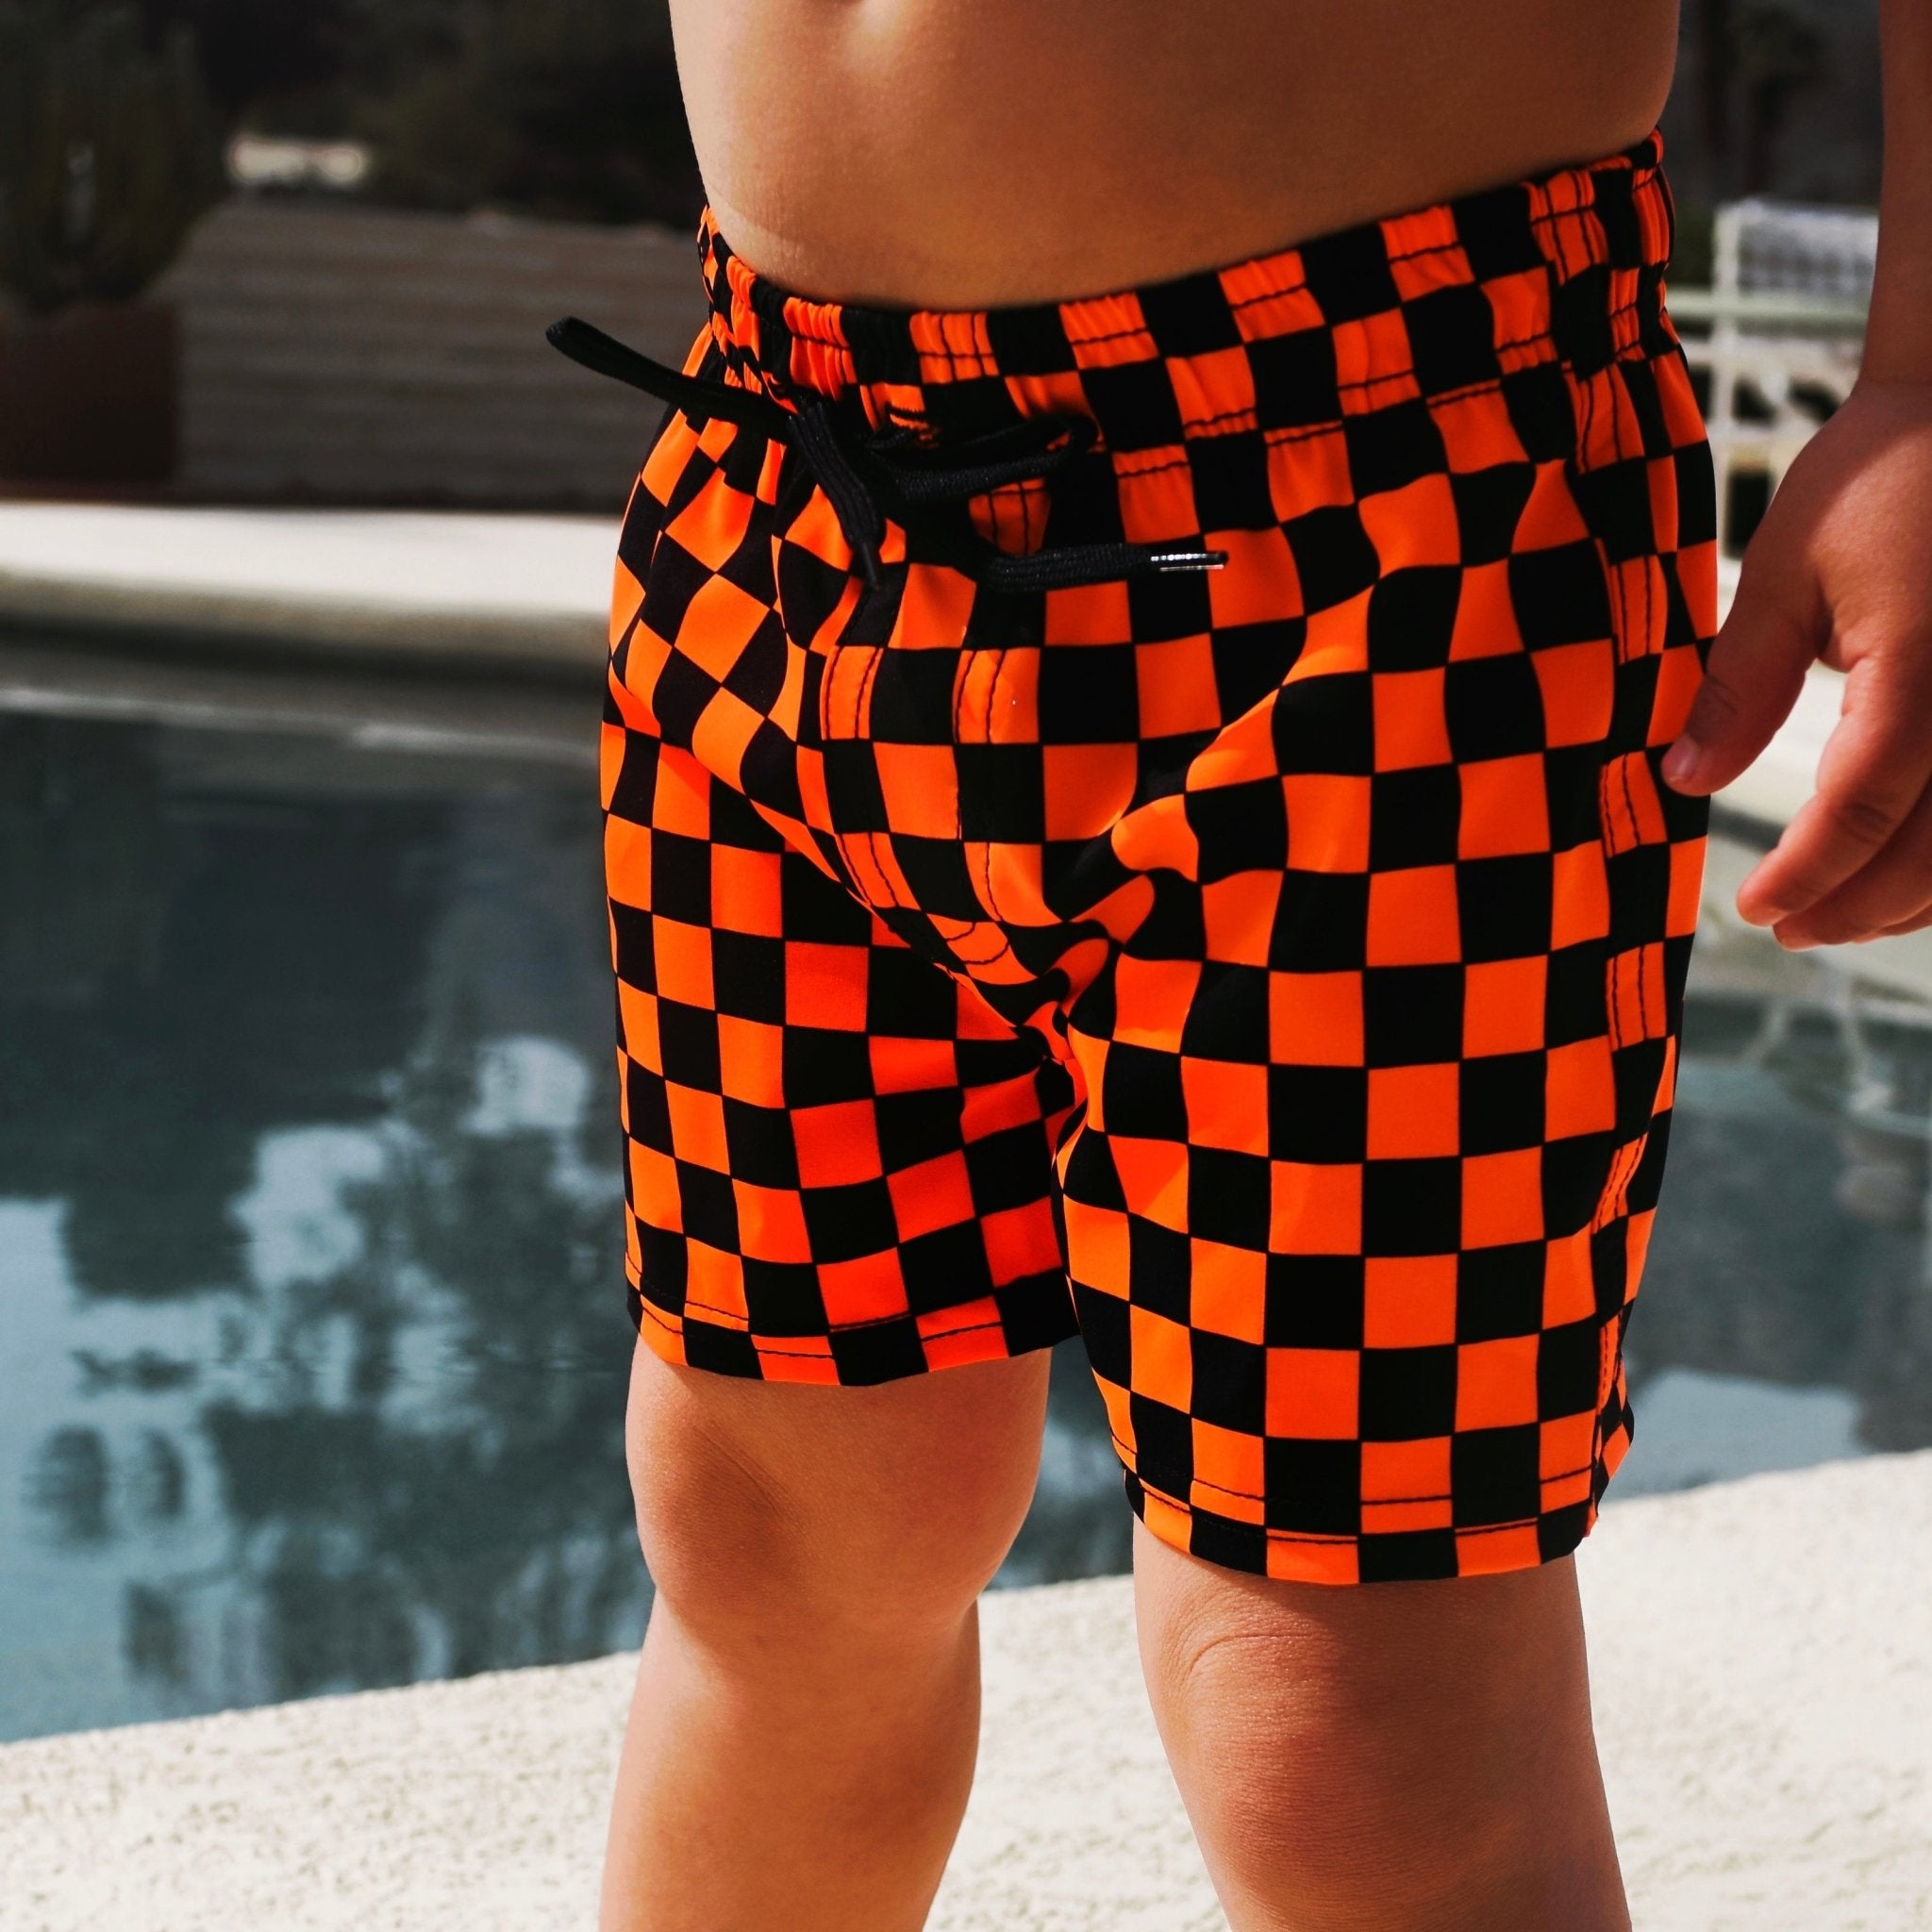 Neon Orange Check Hybrid Swim Shorts - George Hats